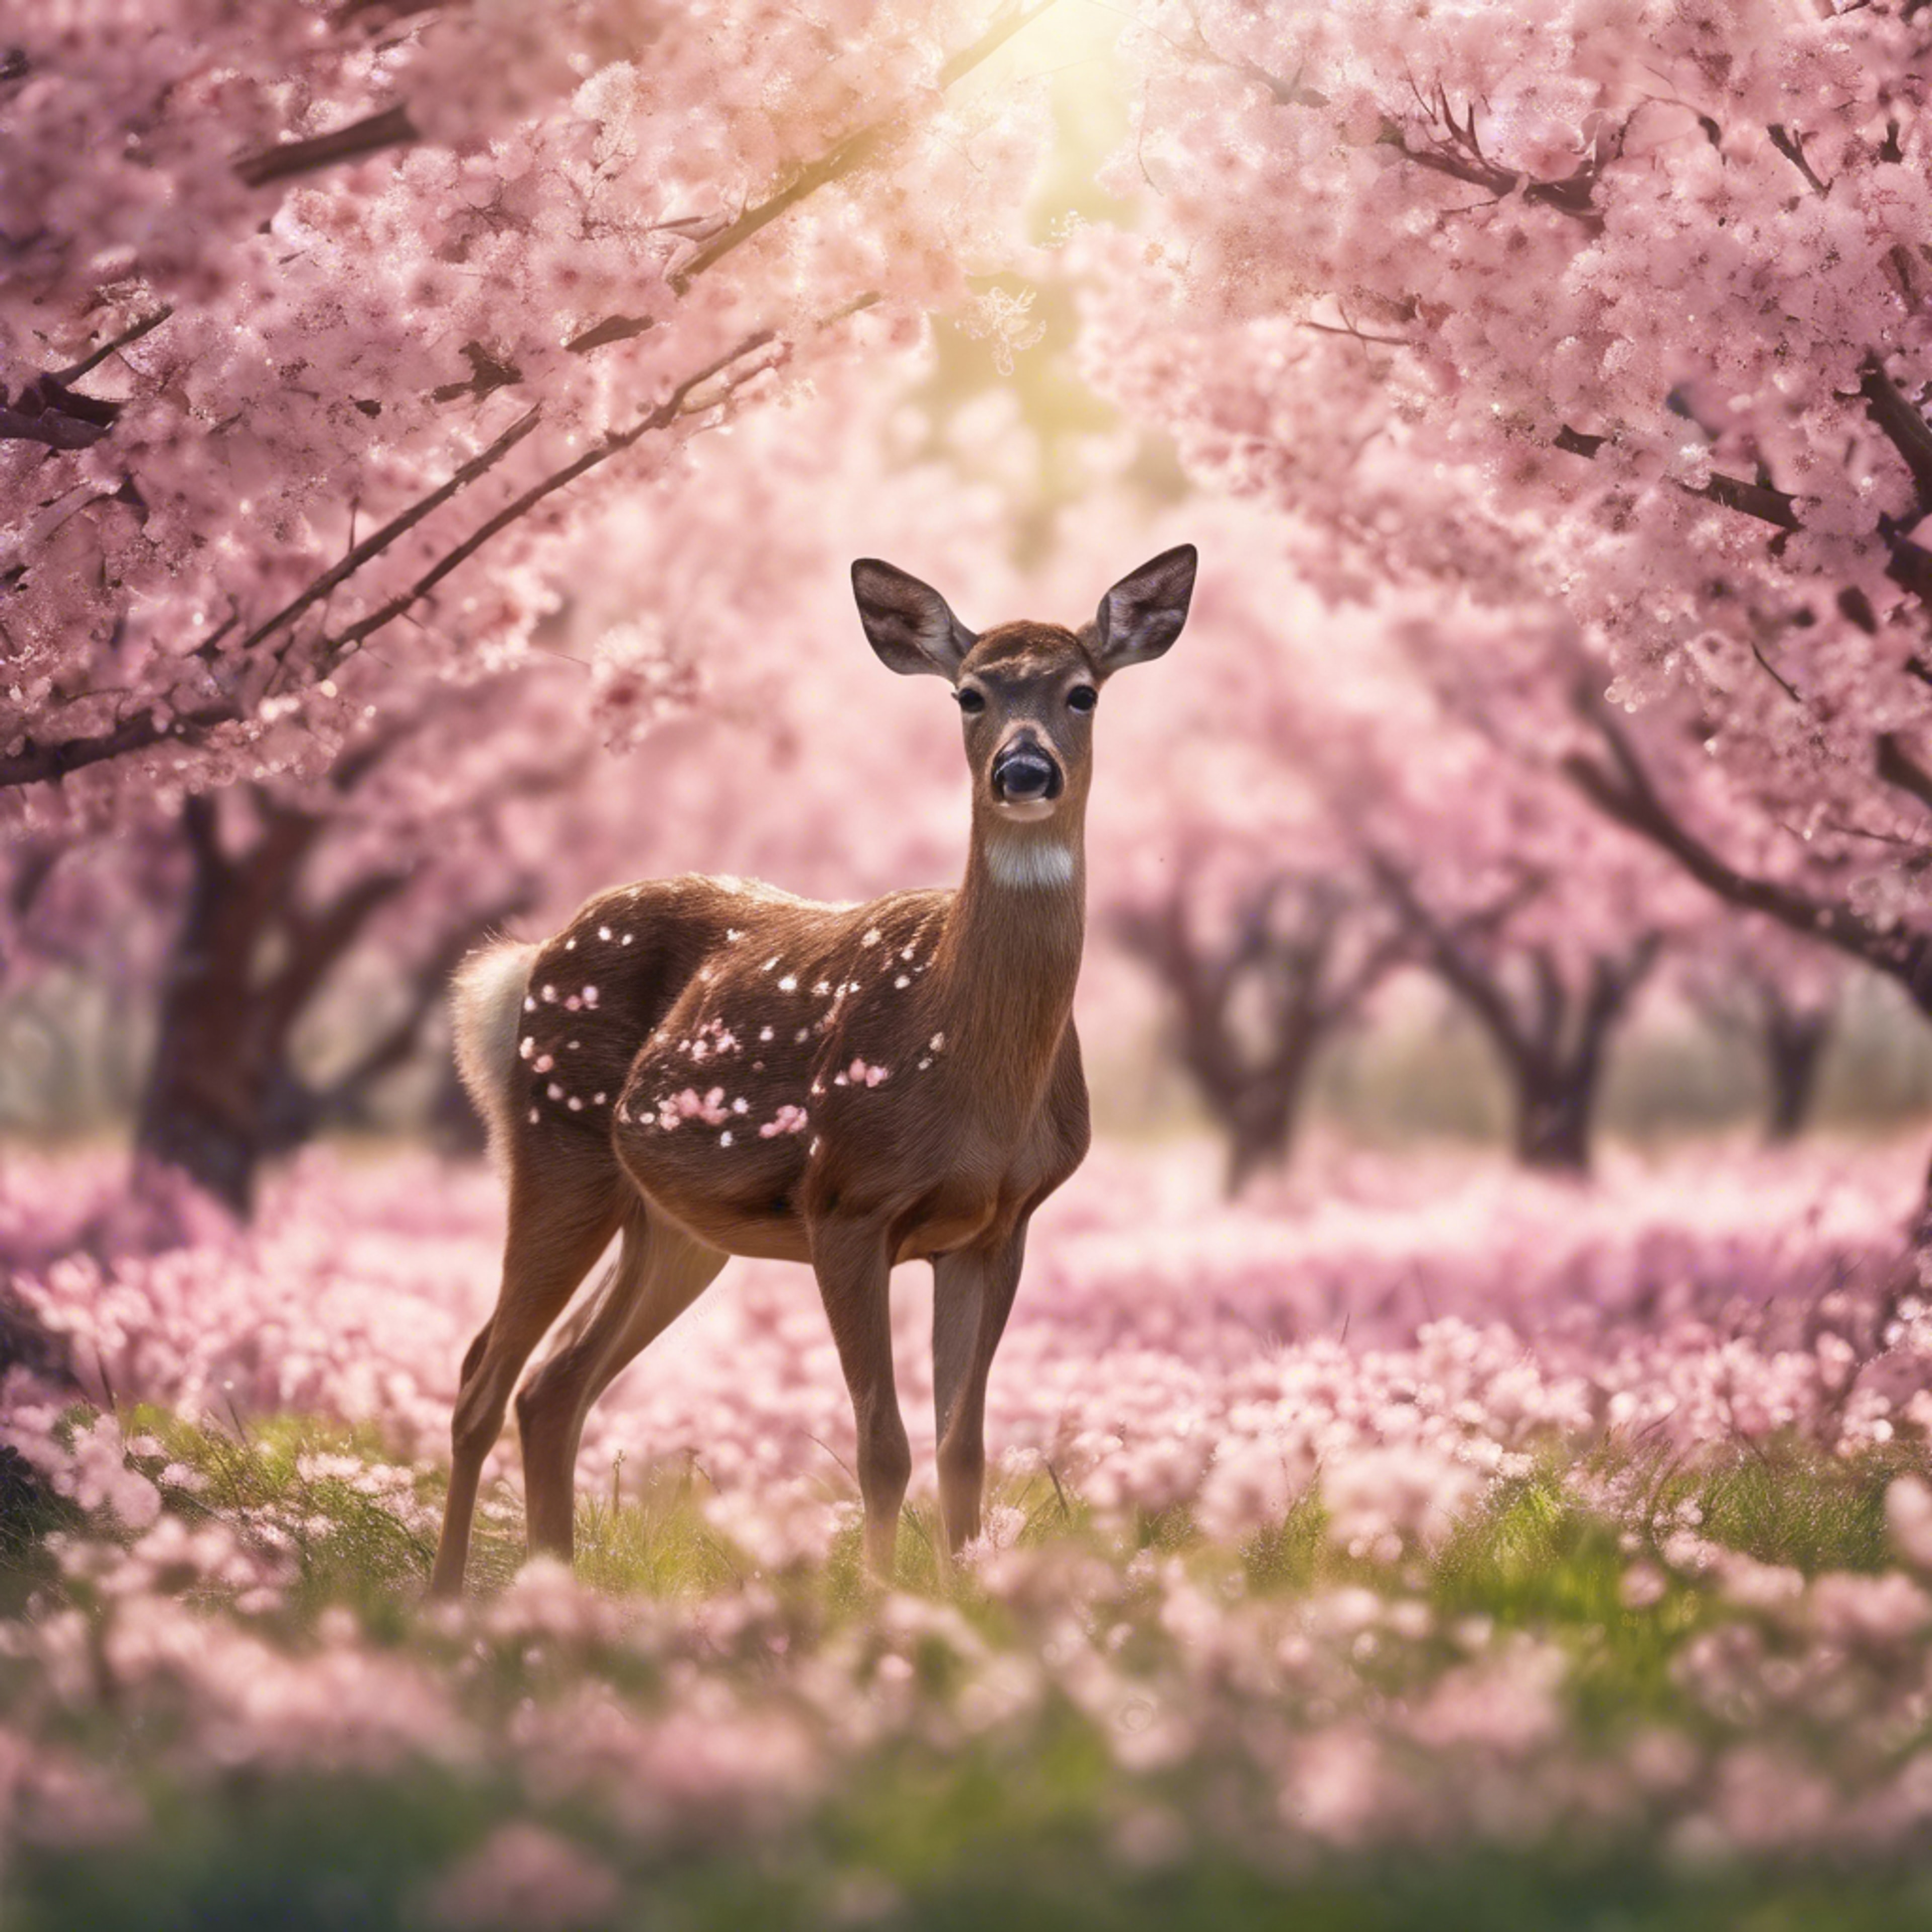 An illustration of a young deer grazing in a field of blooming cherry trees. duvar kağıdı[a2b025554c3c4b6aabc3]